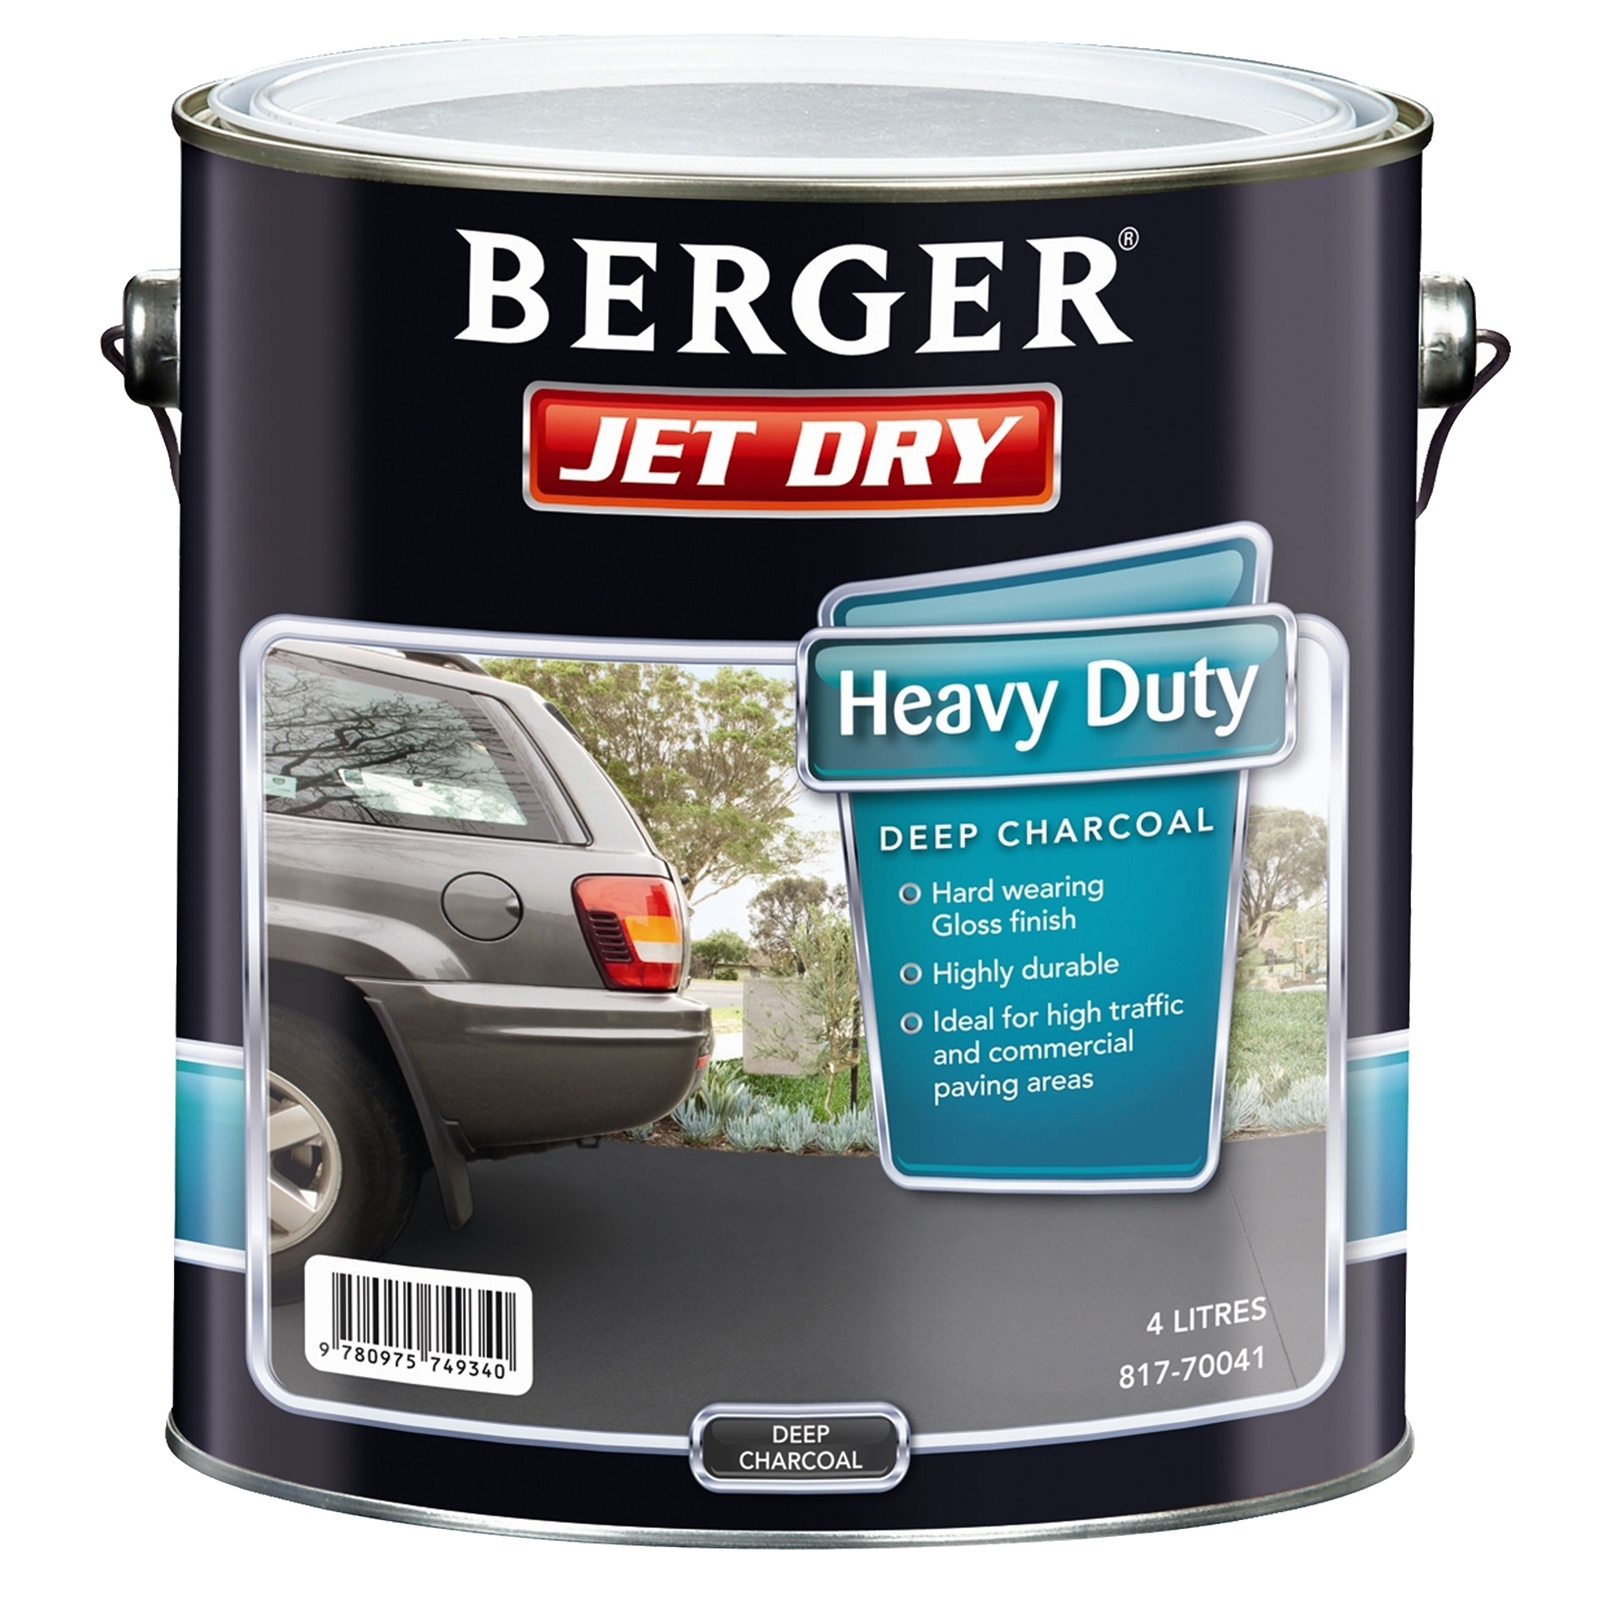 Berger Jet Dry 4L Heavy Duty Deep Charcoal Paving Paint